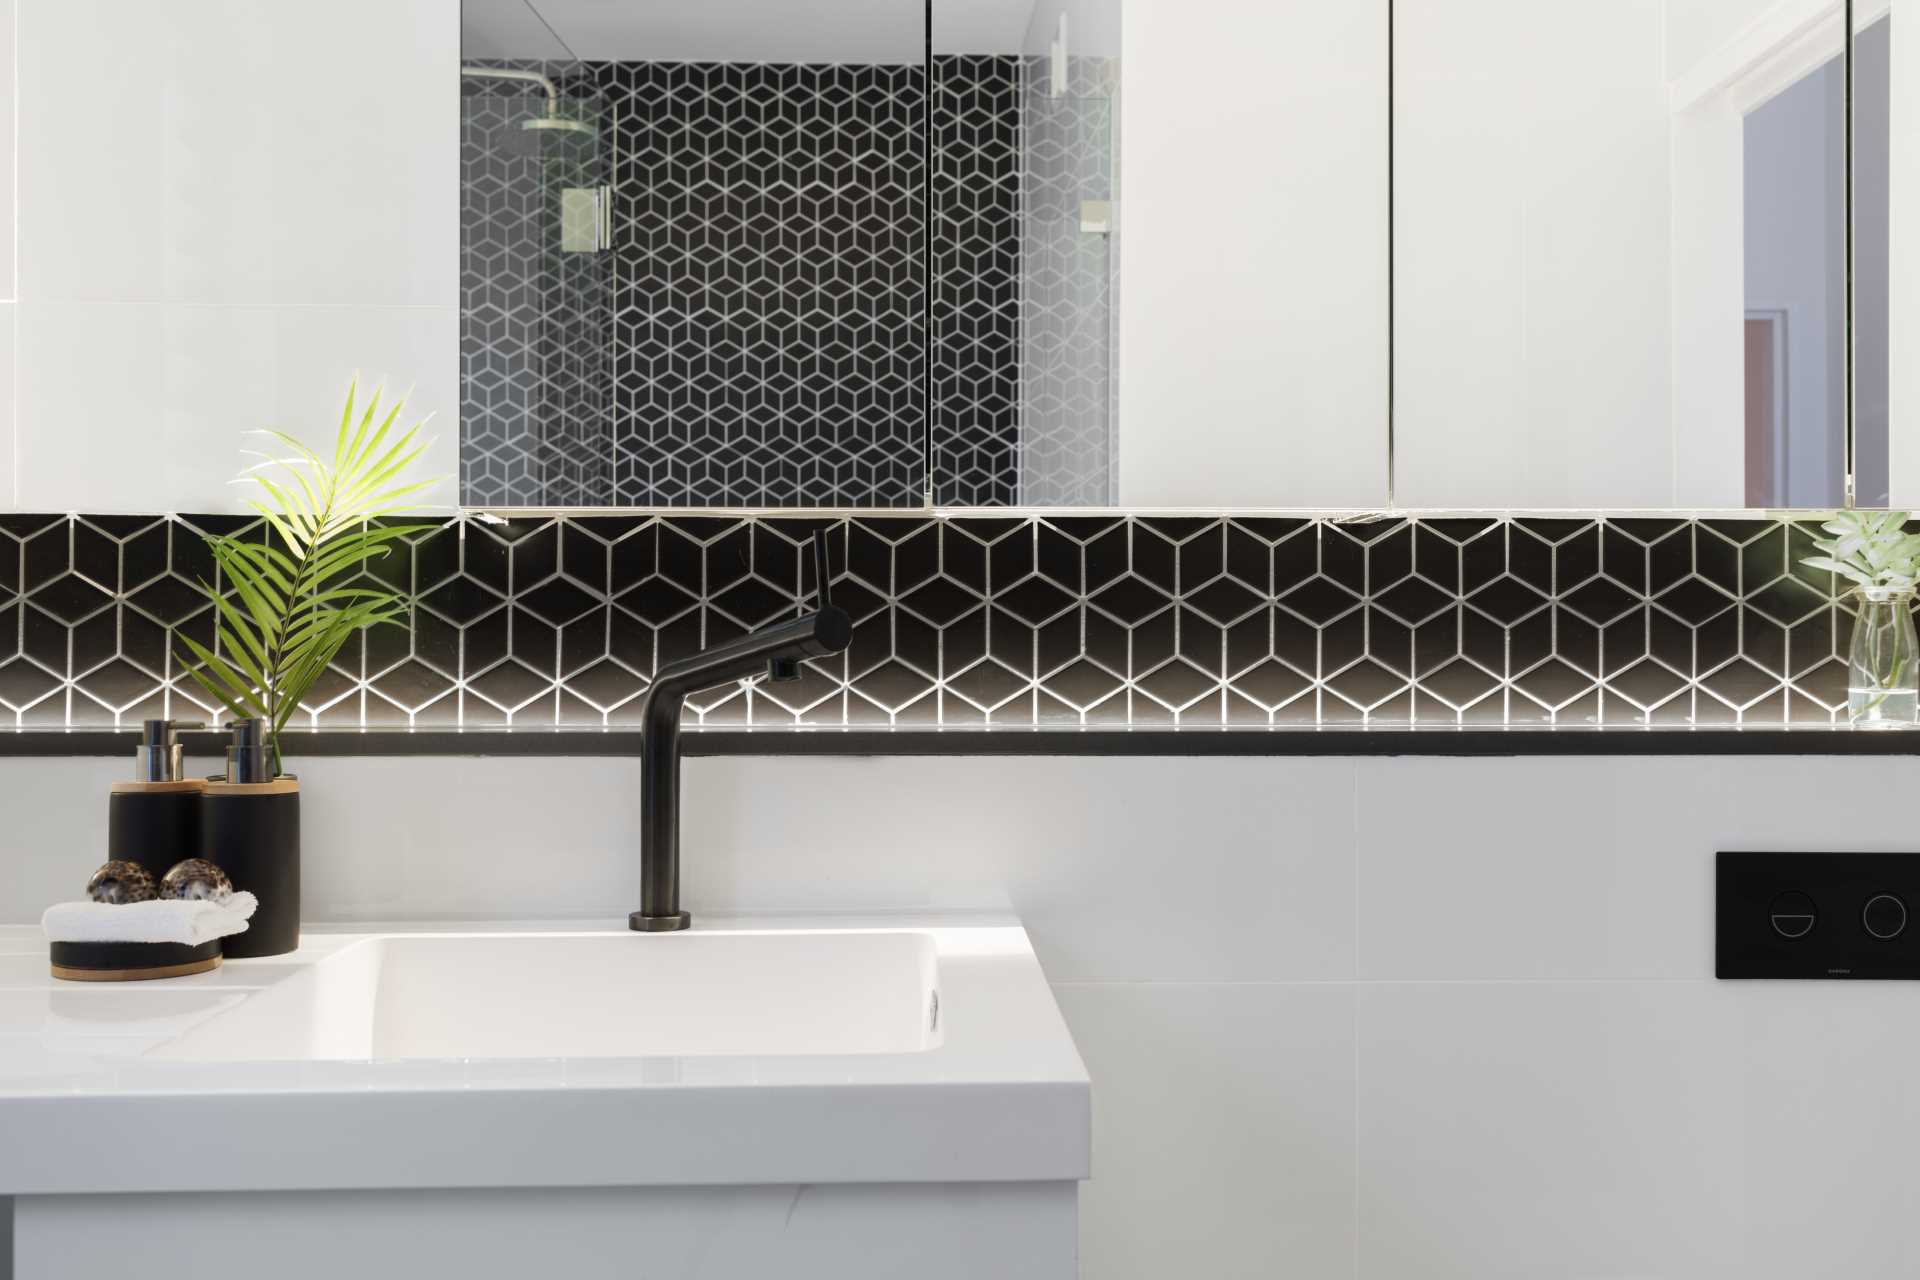 A modern bathroom with bold black geometric tiles.